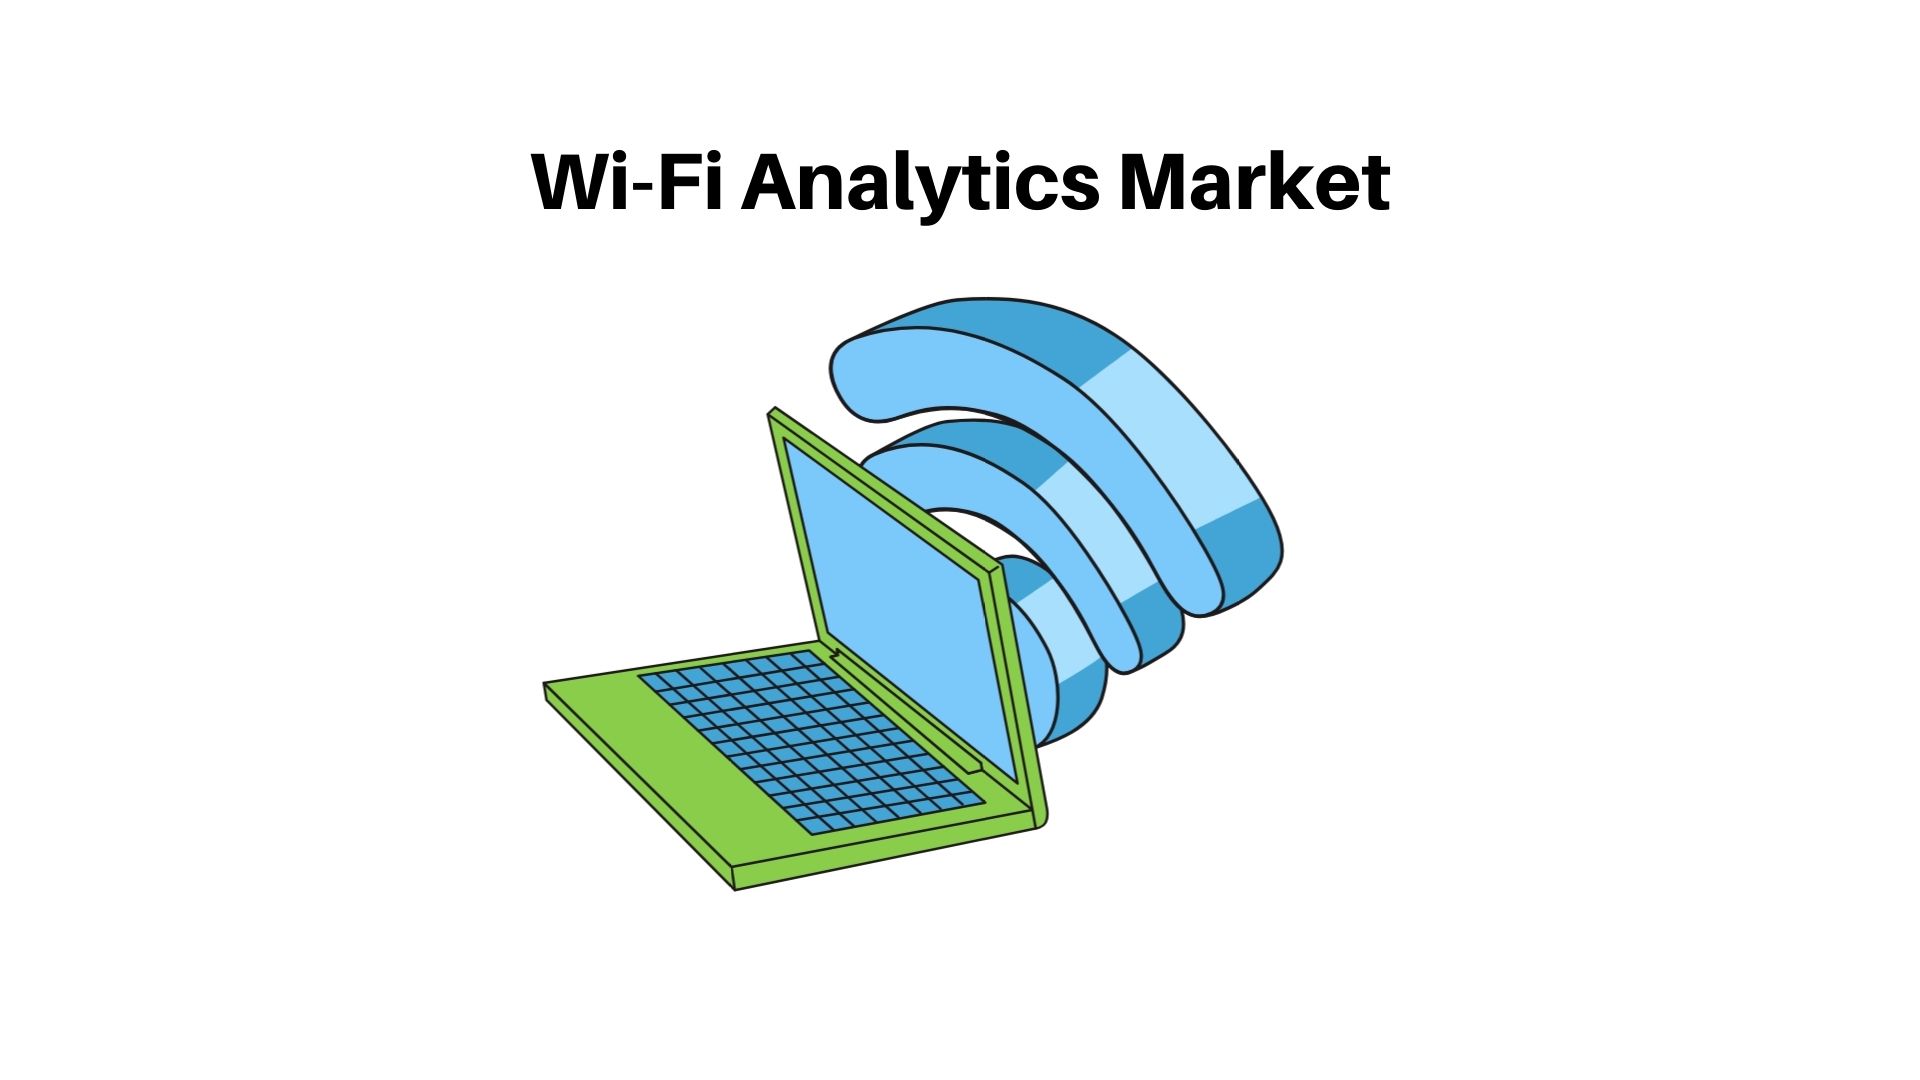 Wi-Fi Analytics Market to Hit USD 134.74 billion by 2033 | CAGR of 26.0%